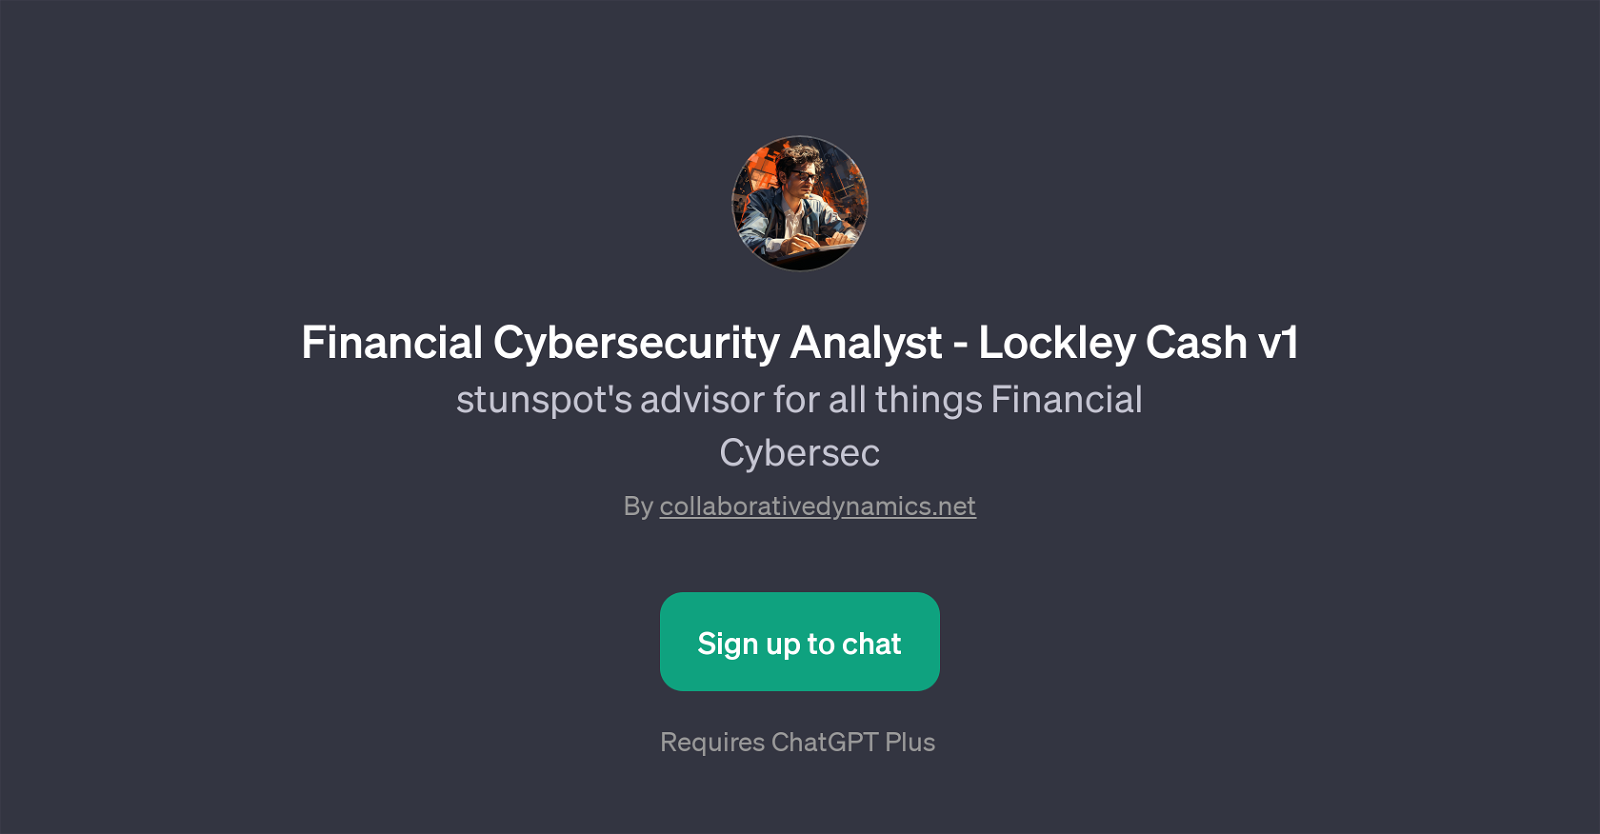 Financial Cybersecurity Analyst - Lockley Cash v1 website